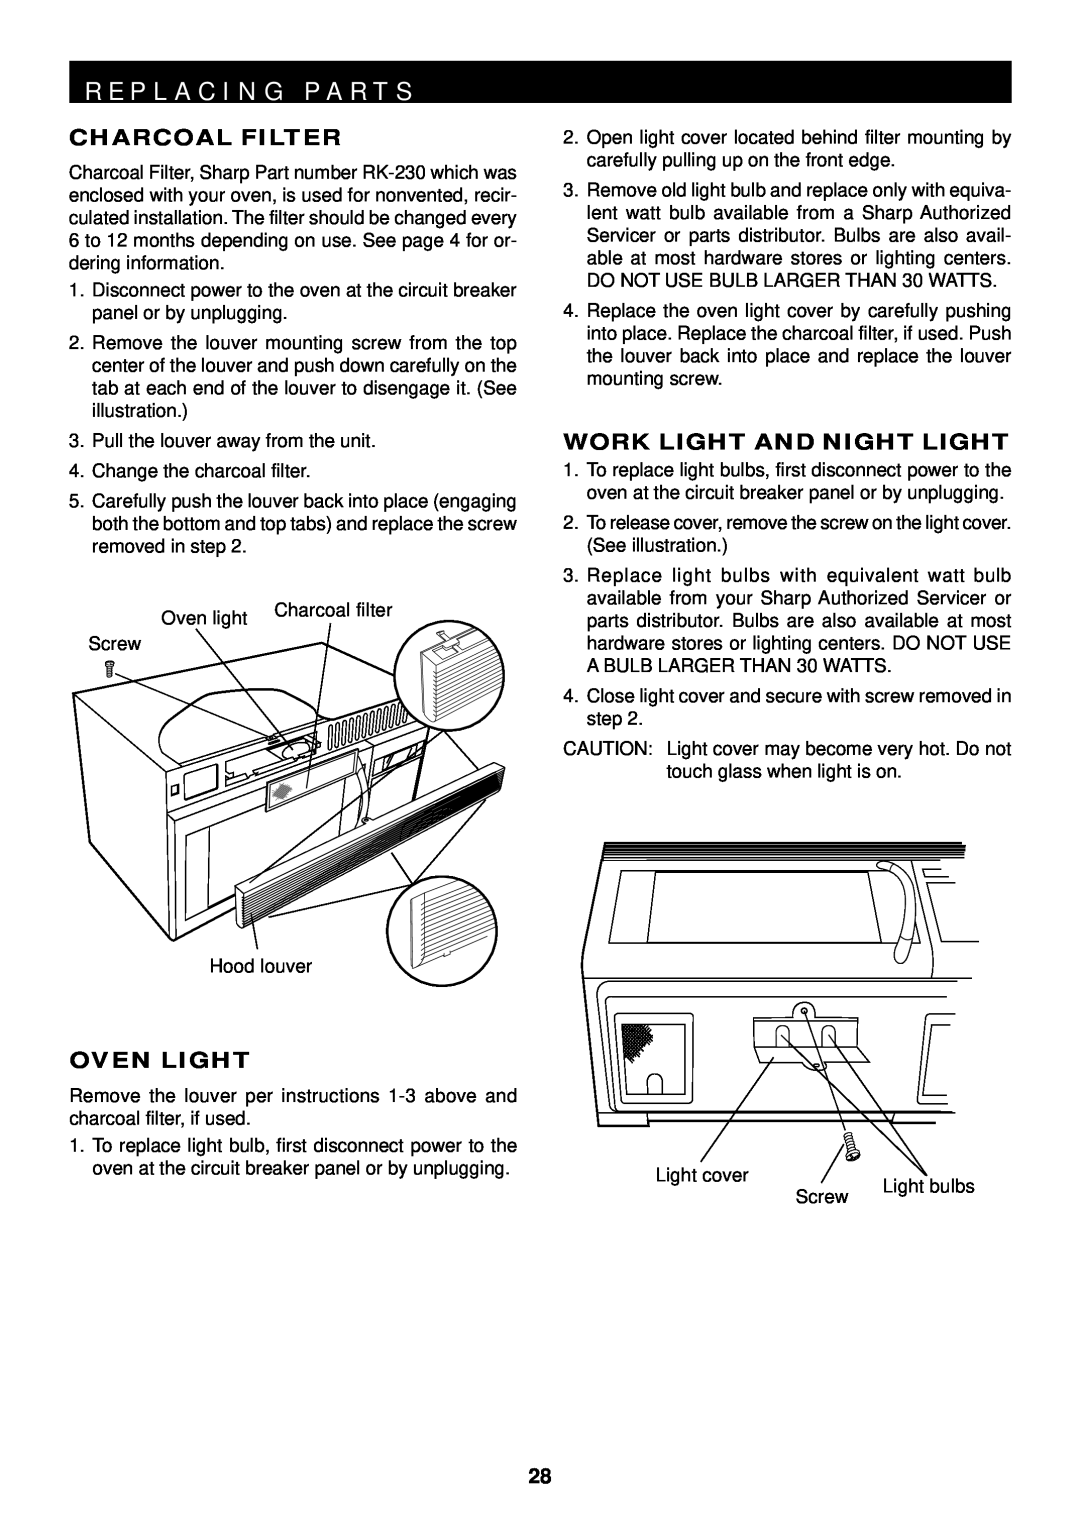 Sharp R-1611, R-1610, R-1612 manual R E P L A C I N G P A R T S, Charcoal Filter, Work Light And Night Light, Oven Light 